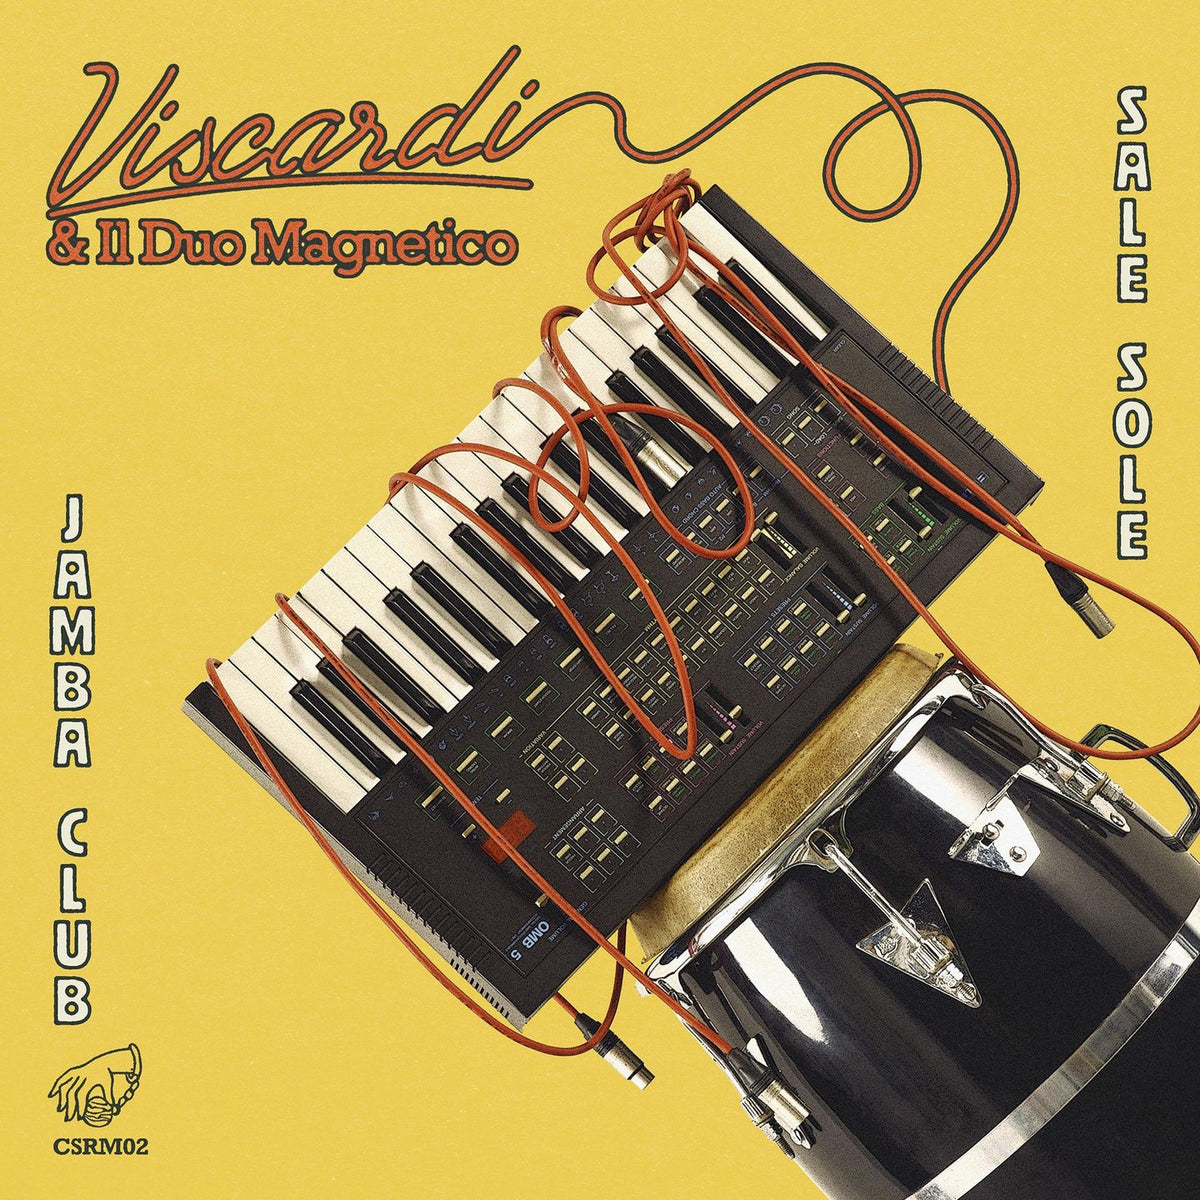 Viscardi & Il Duo Magnetico - Sale Sole b/w Jamba Club